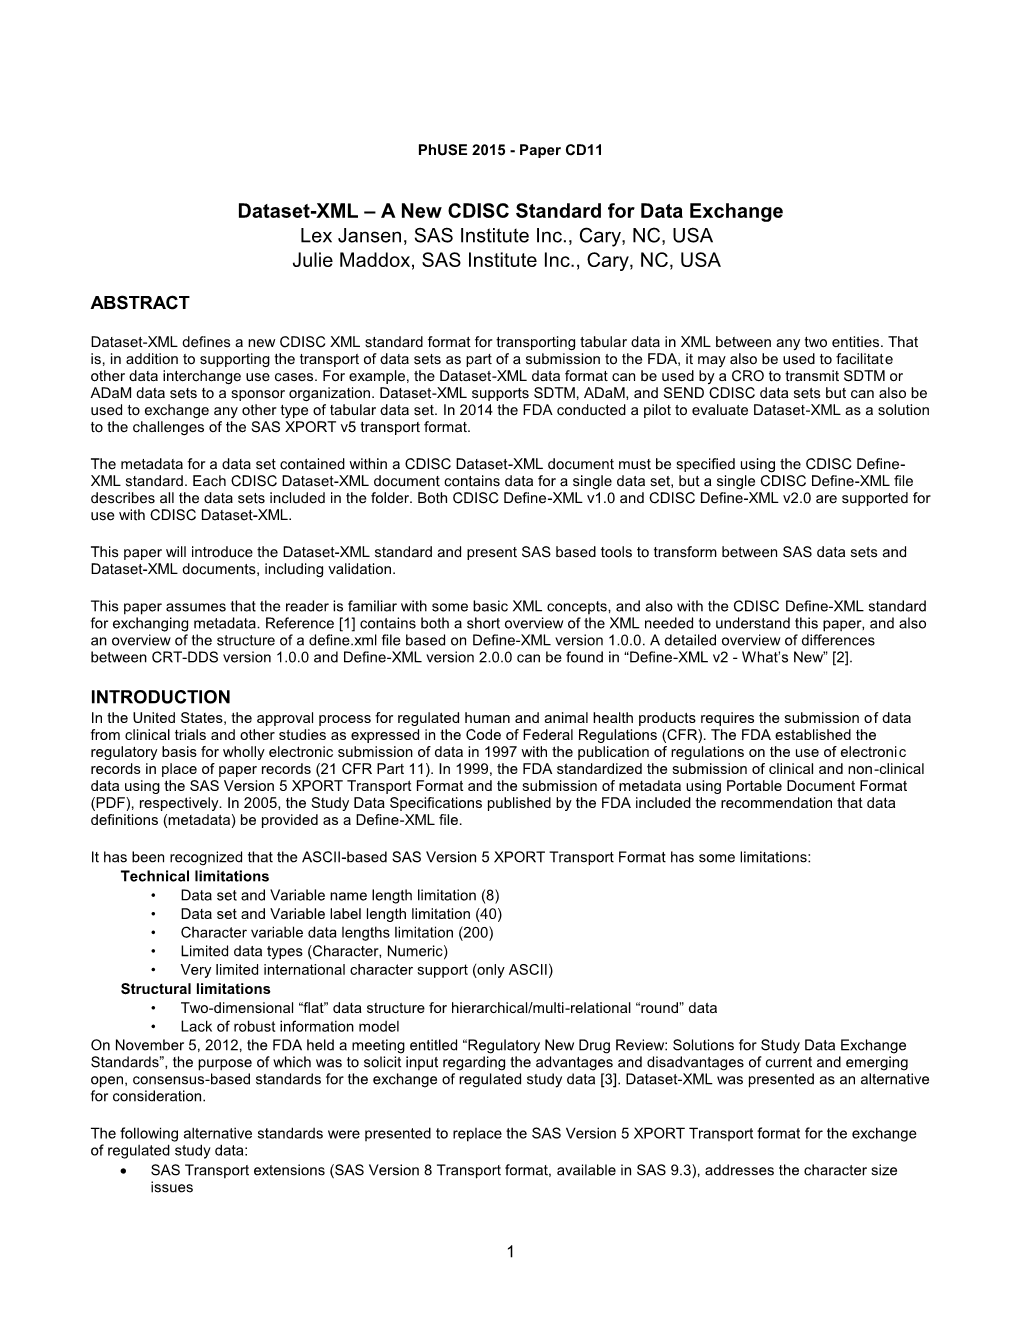 Dataset-XML – a New CDISC Standard for Data Exchange Lex Jansen, SAS Institute Inc., Cary, NC, USA Julie Maddox, SAS Institute Inc., Cary, NC, USA